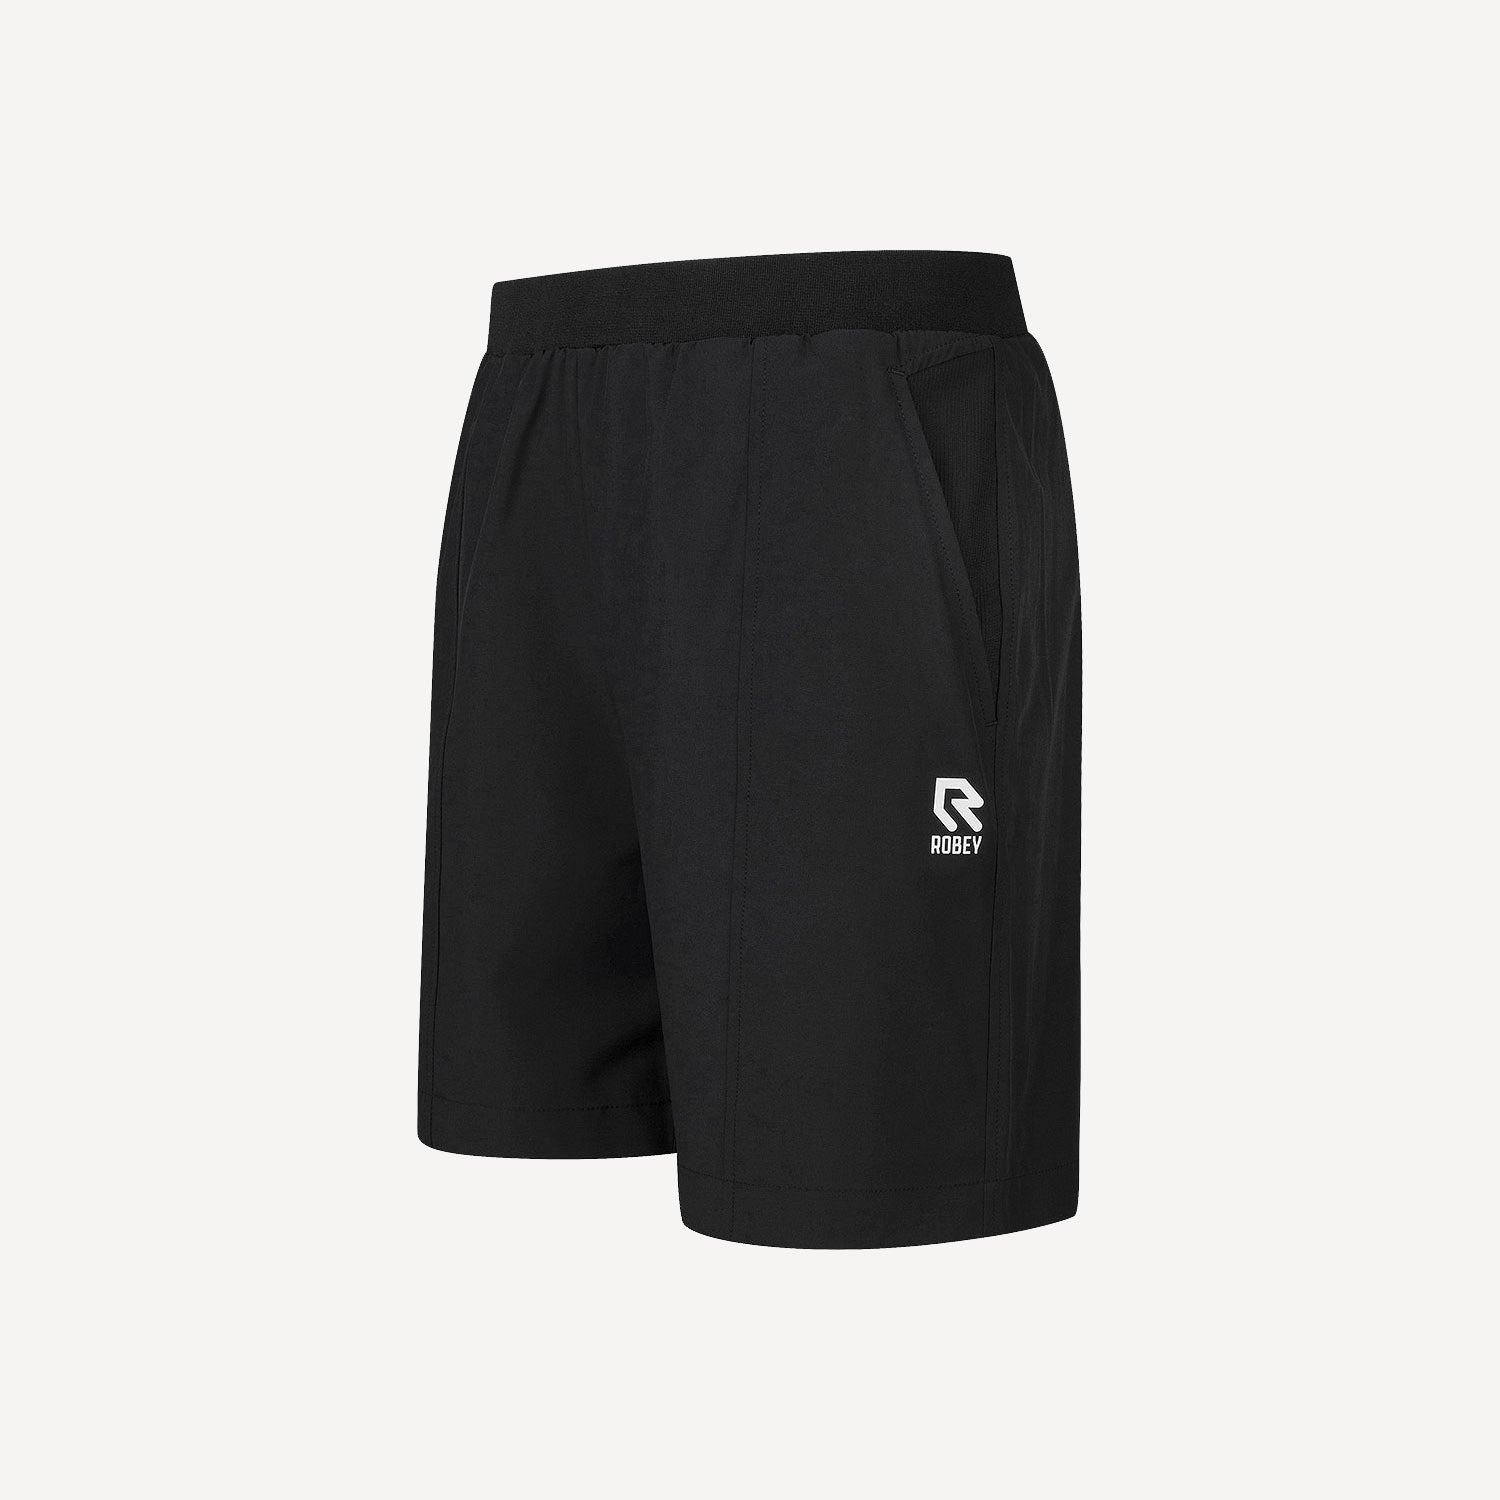 Robey Ace Men's Tennis Shorts - Black (2)